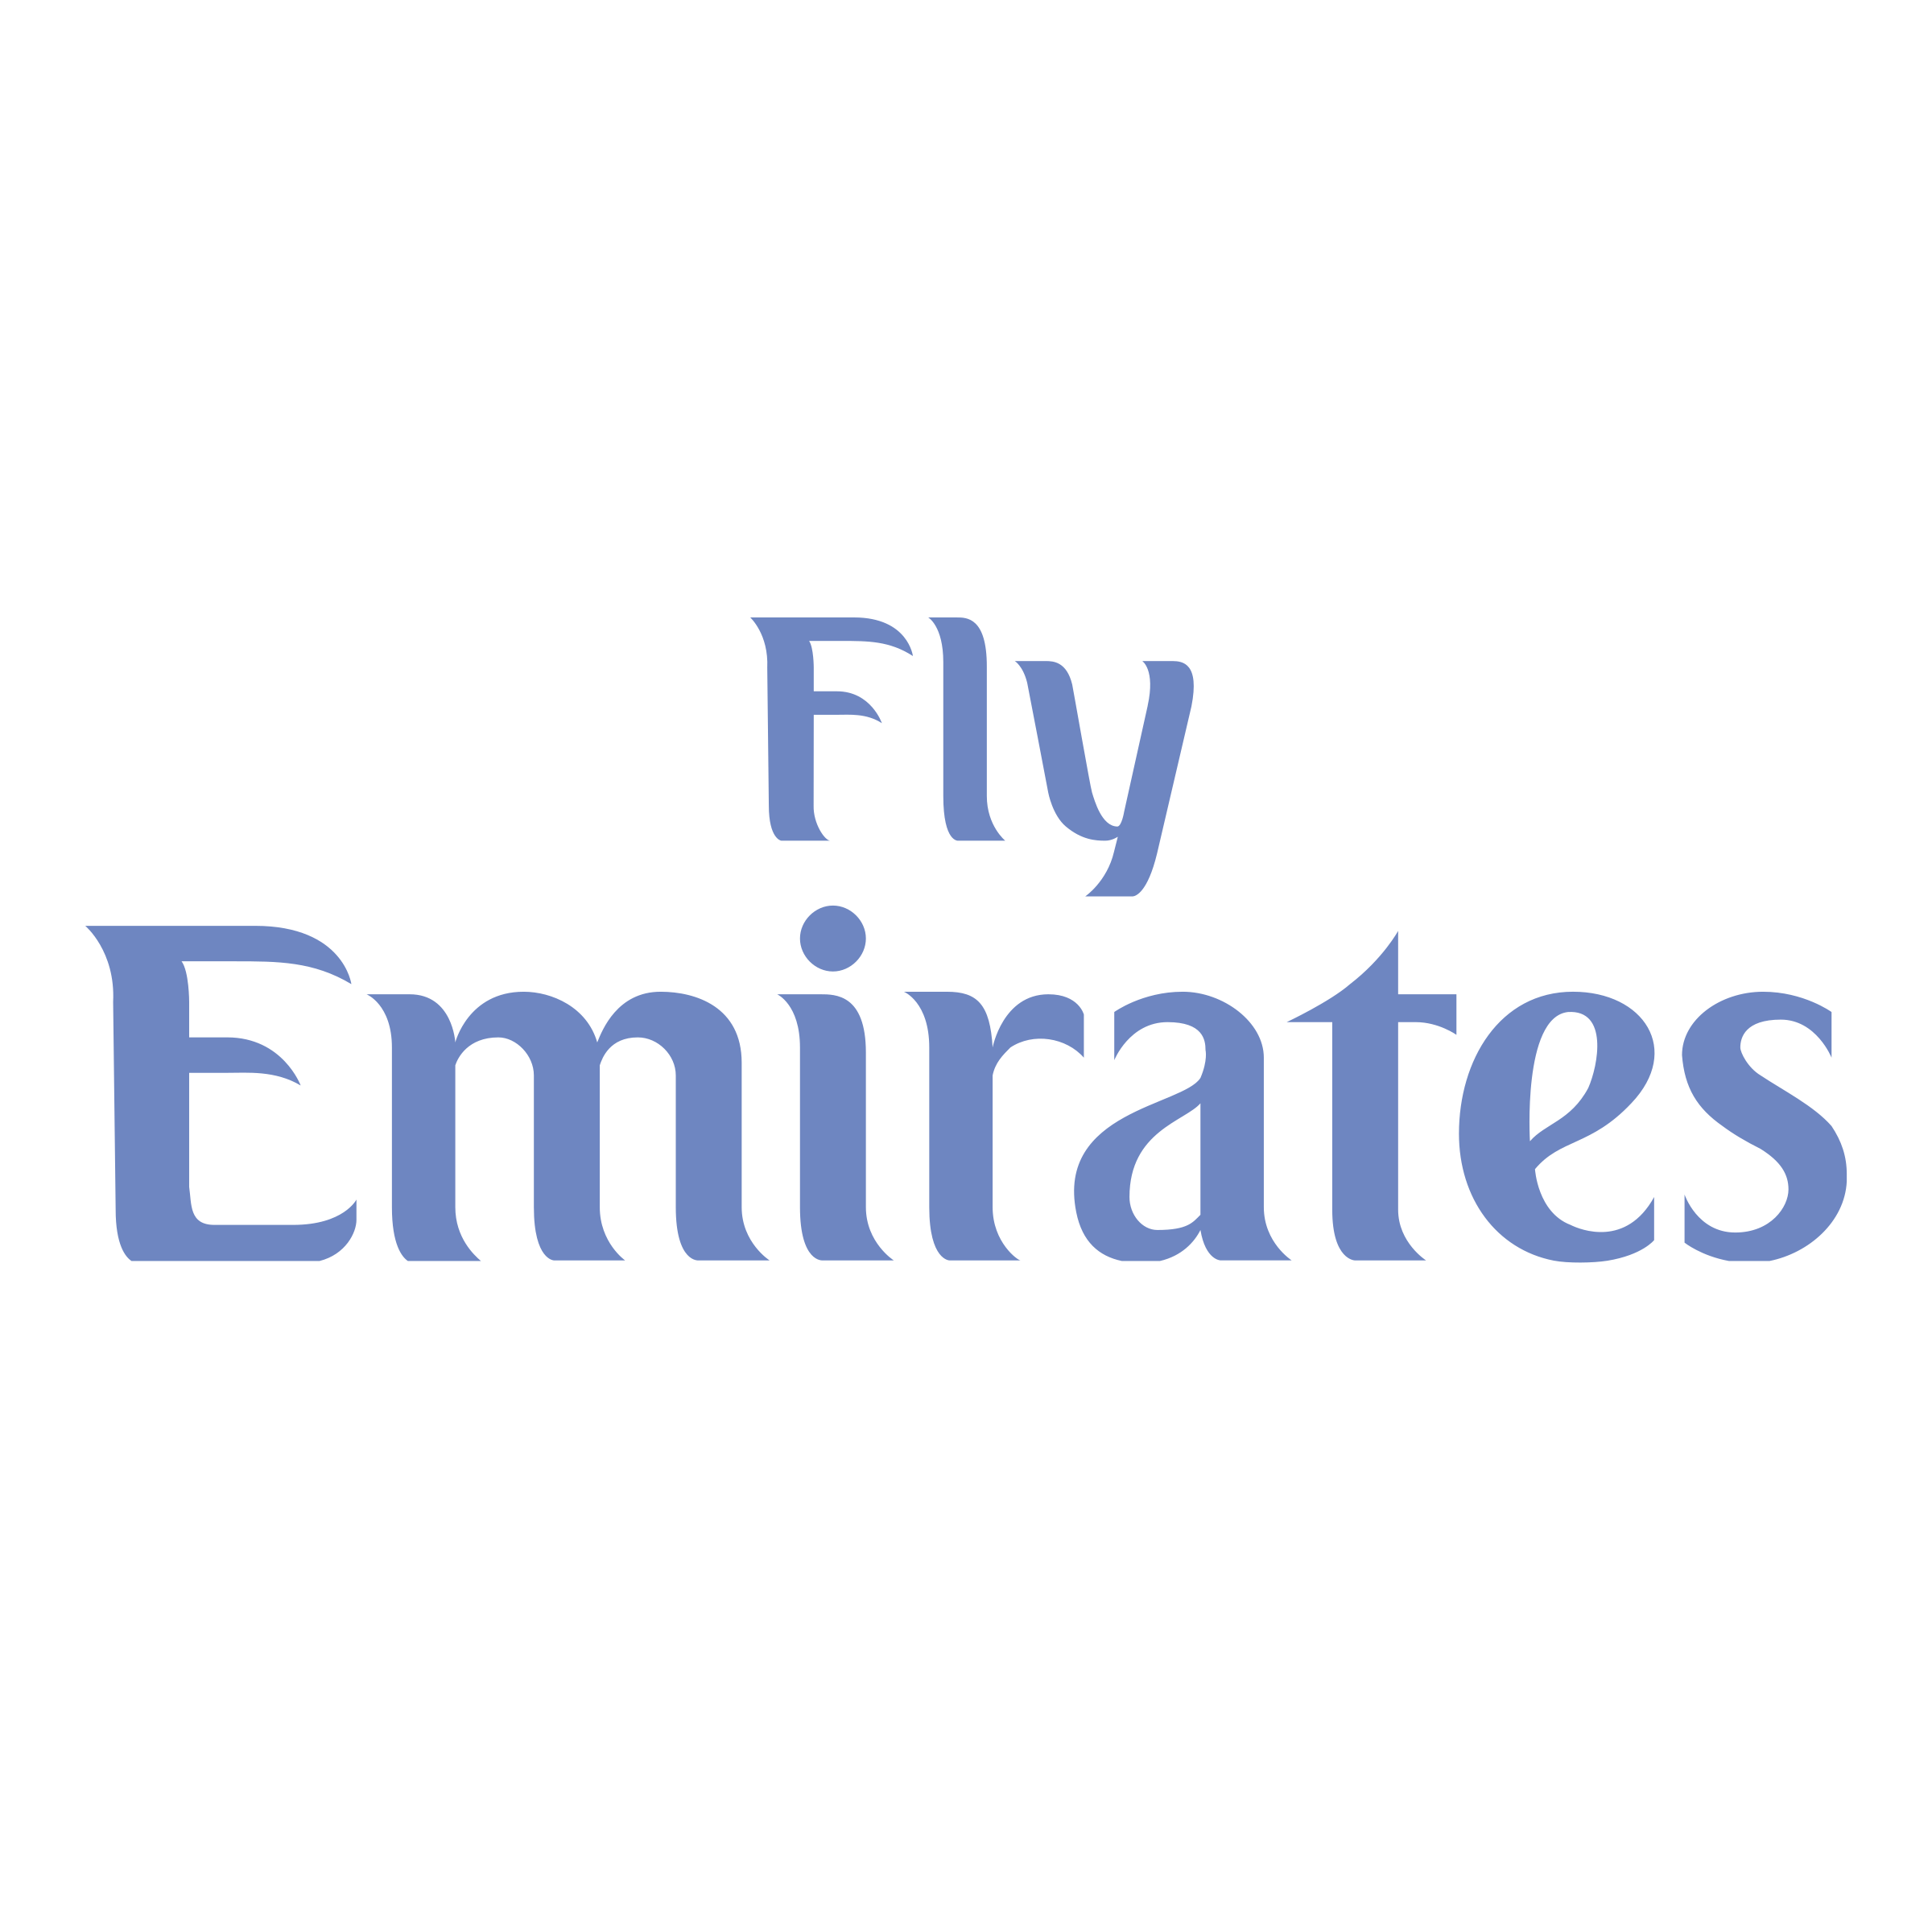 Emerates Logo - Fly Emirates Logo PNG Transparent & SVG Vector - Freebie Supply